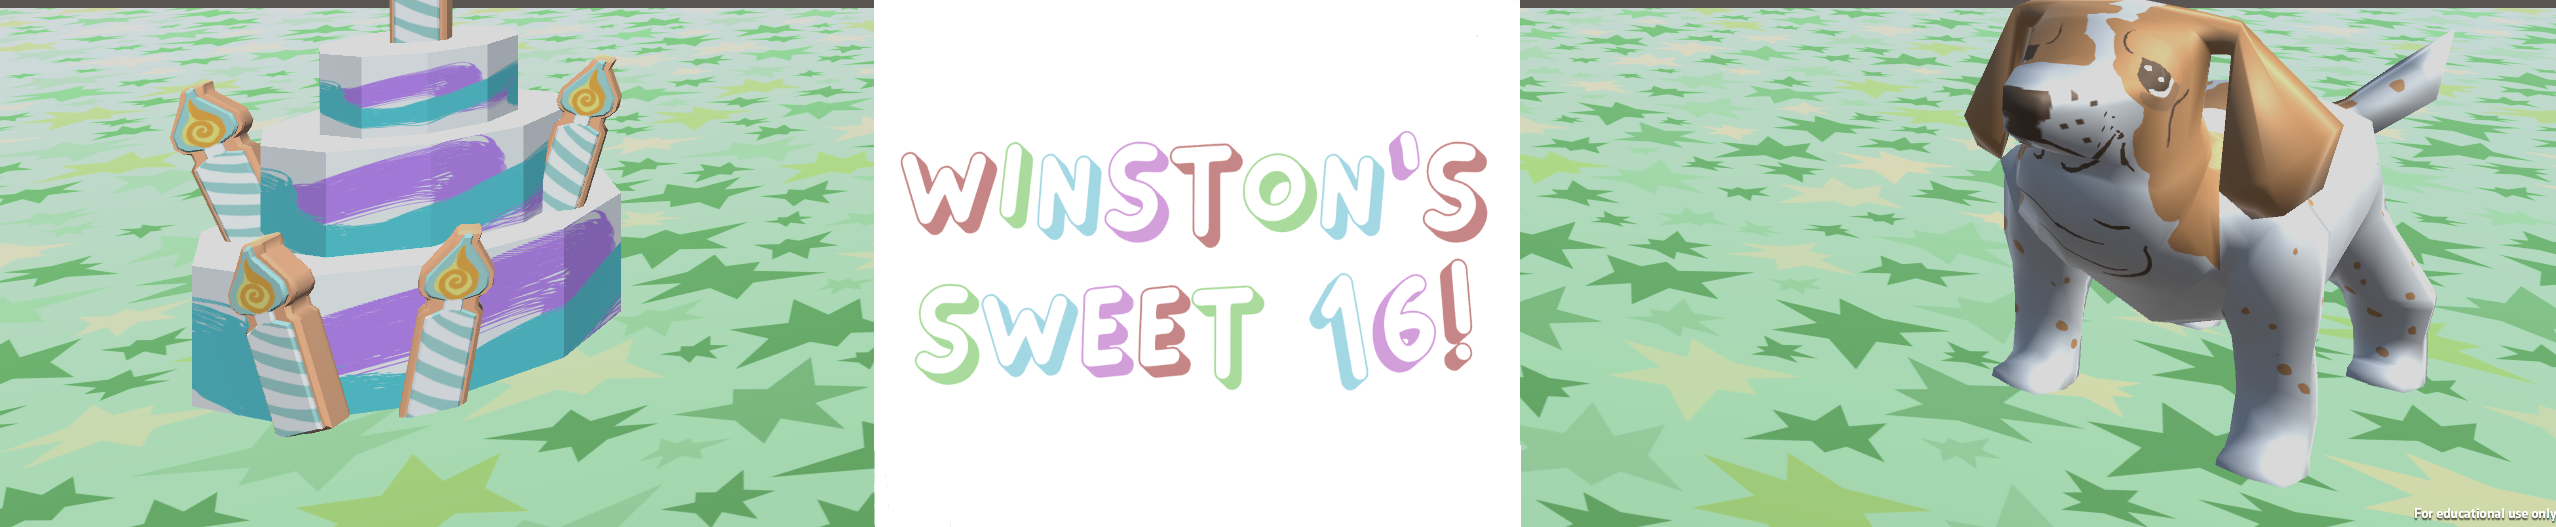 Winston's Sweet 16